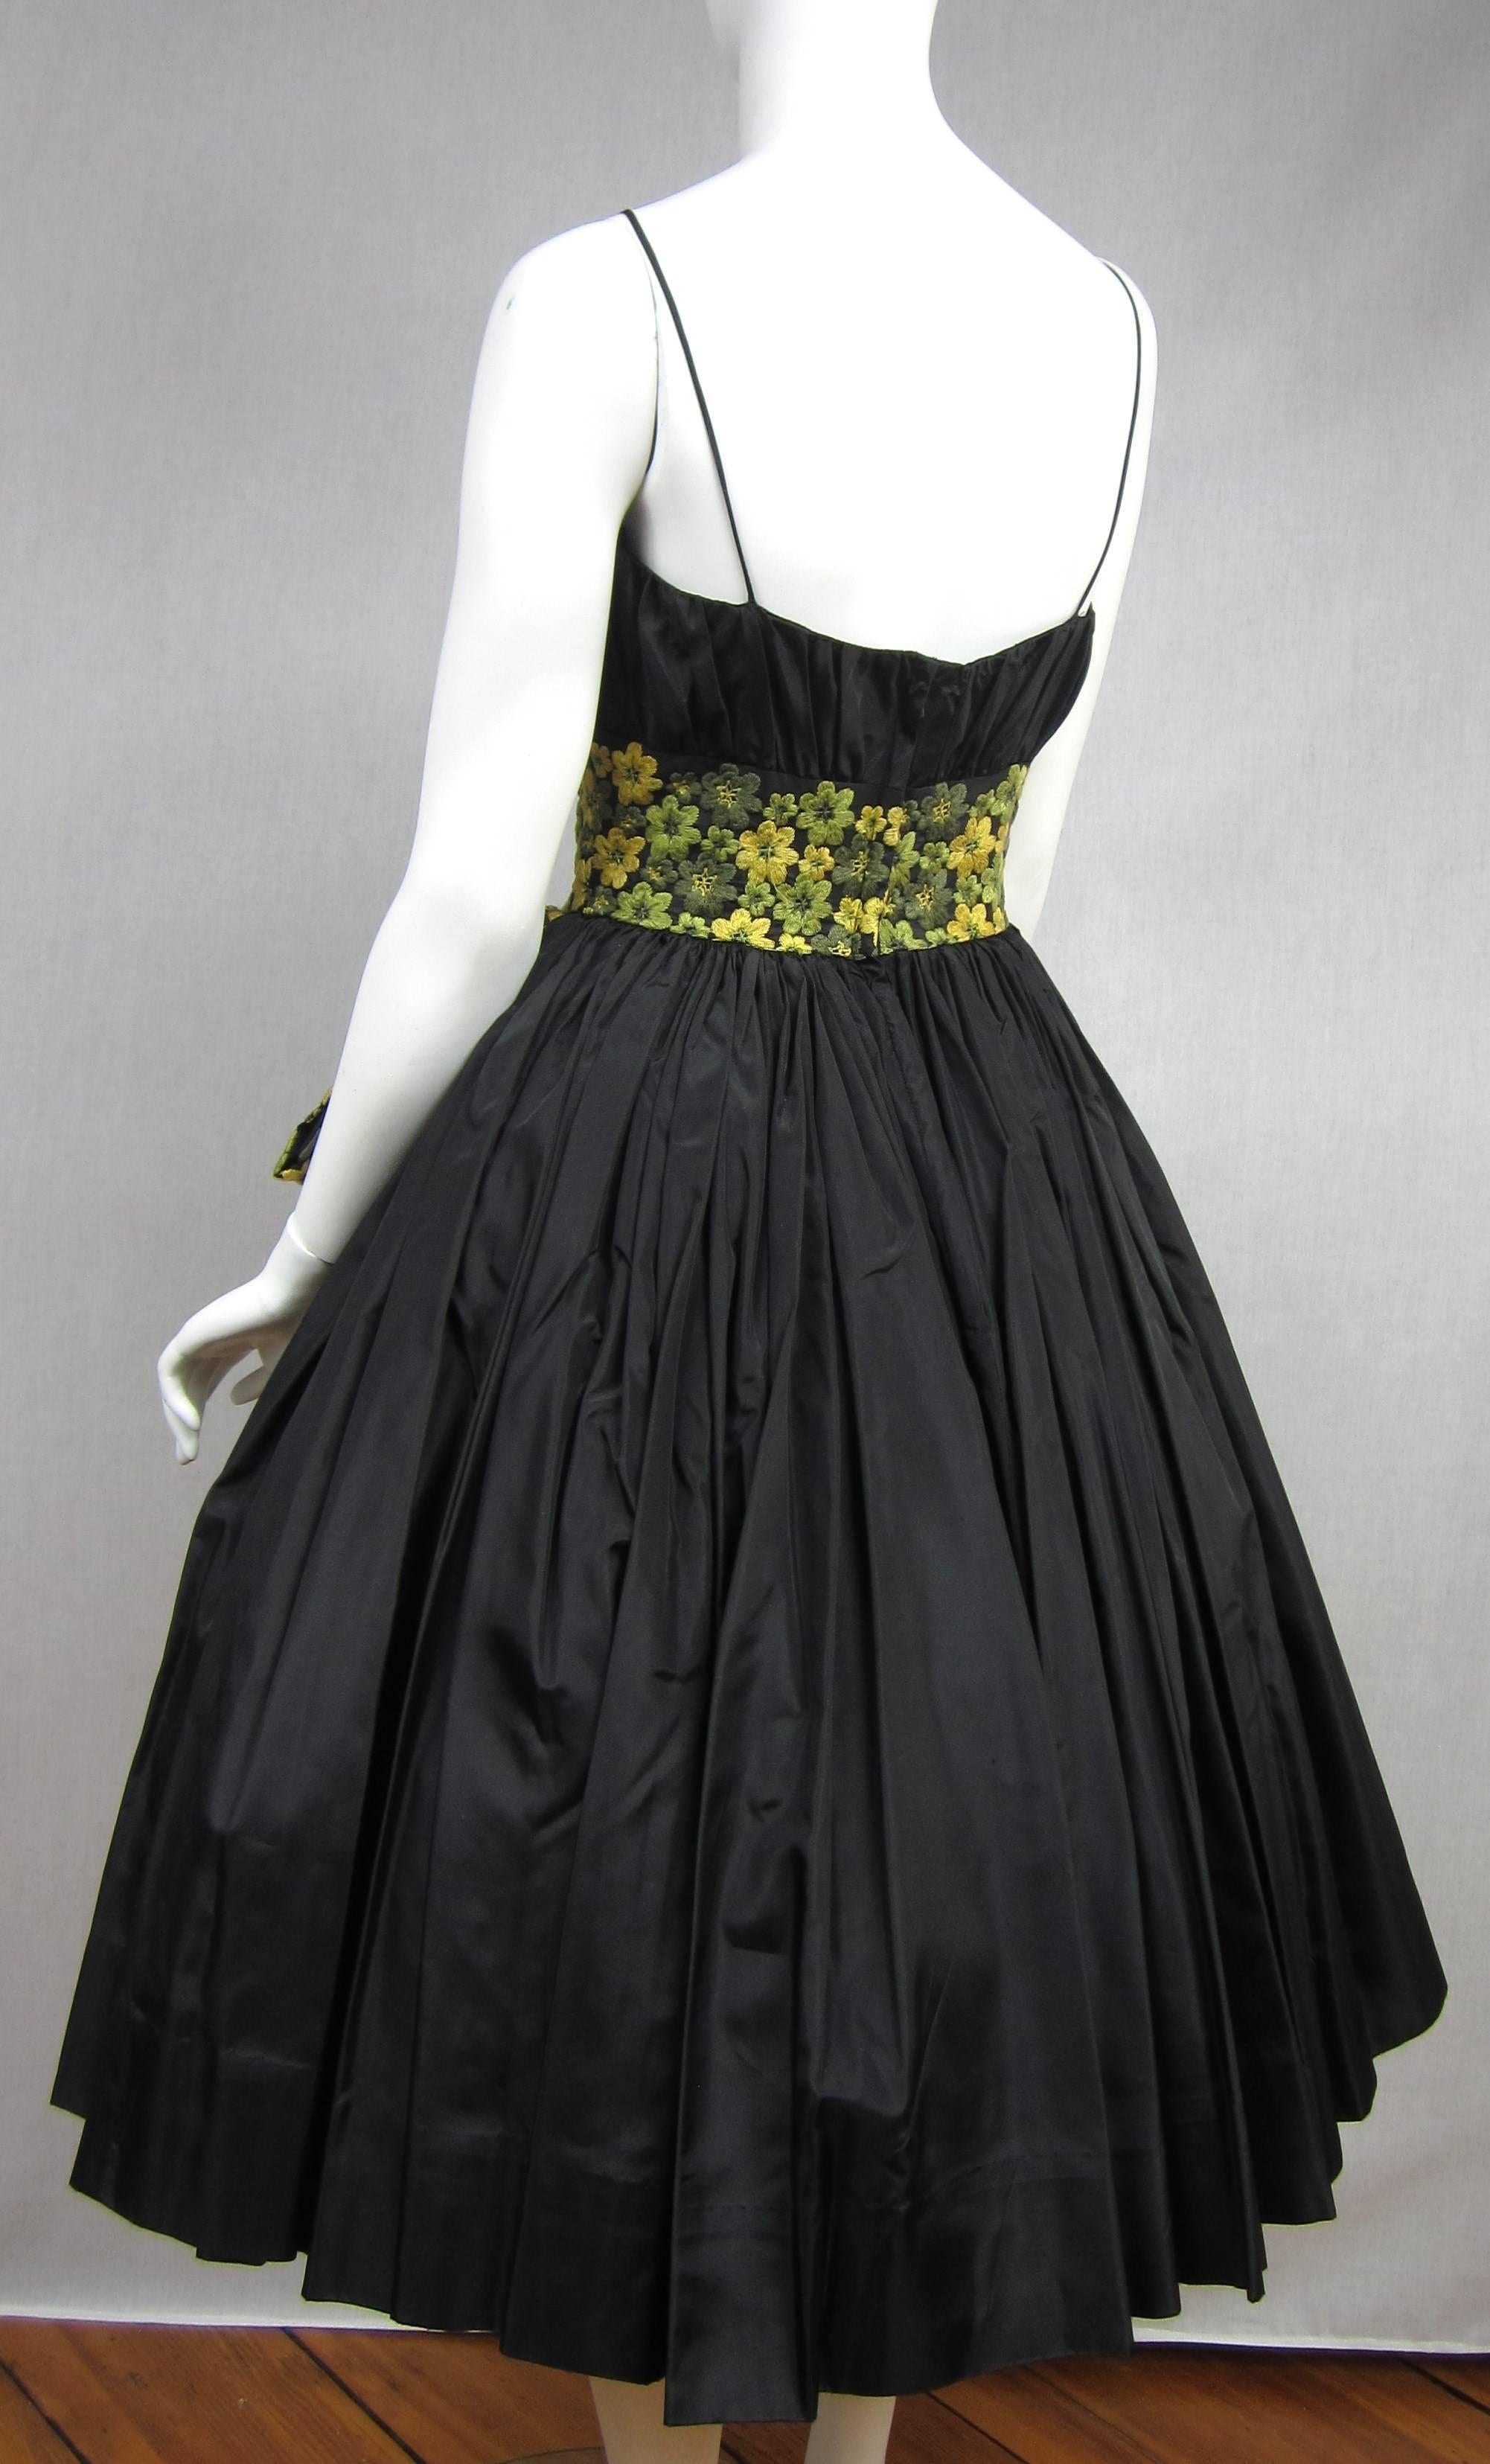  1950s Dress Black Embroidered Shelf Bust Taffeta Party Dress For Sale 2